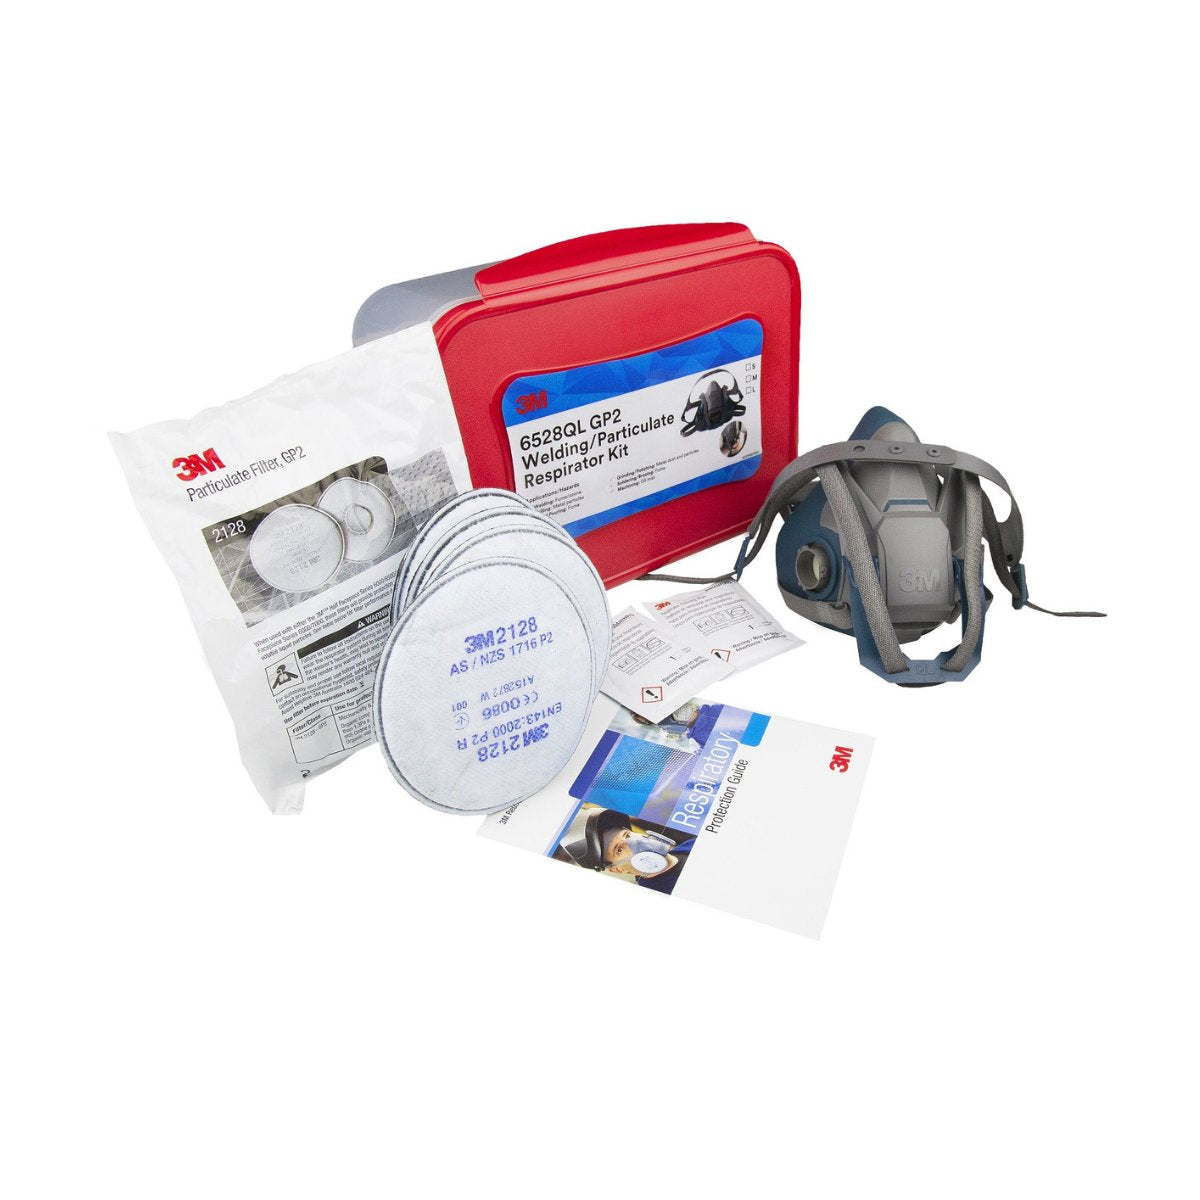 3M™ Welding/Particulate Respirator Kit 6528QL, GP2 (Kit)